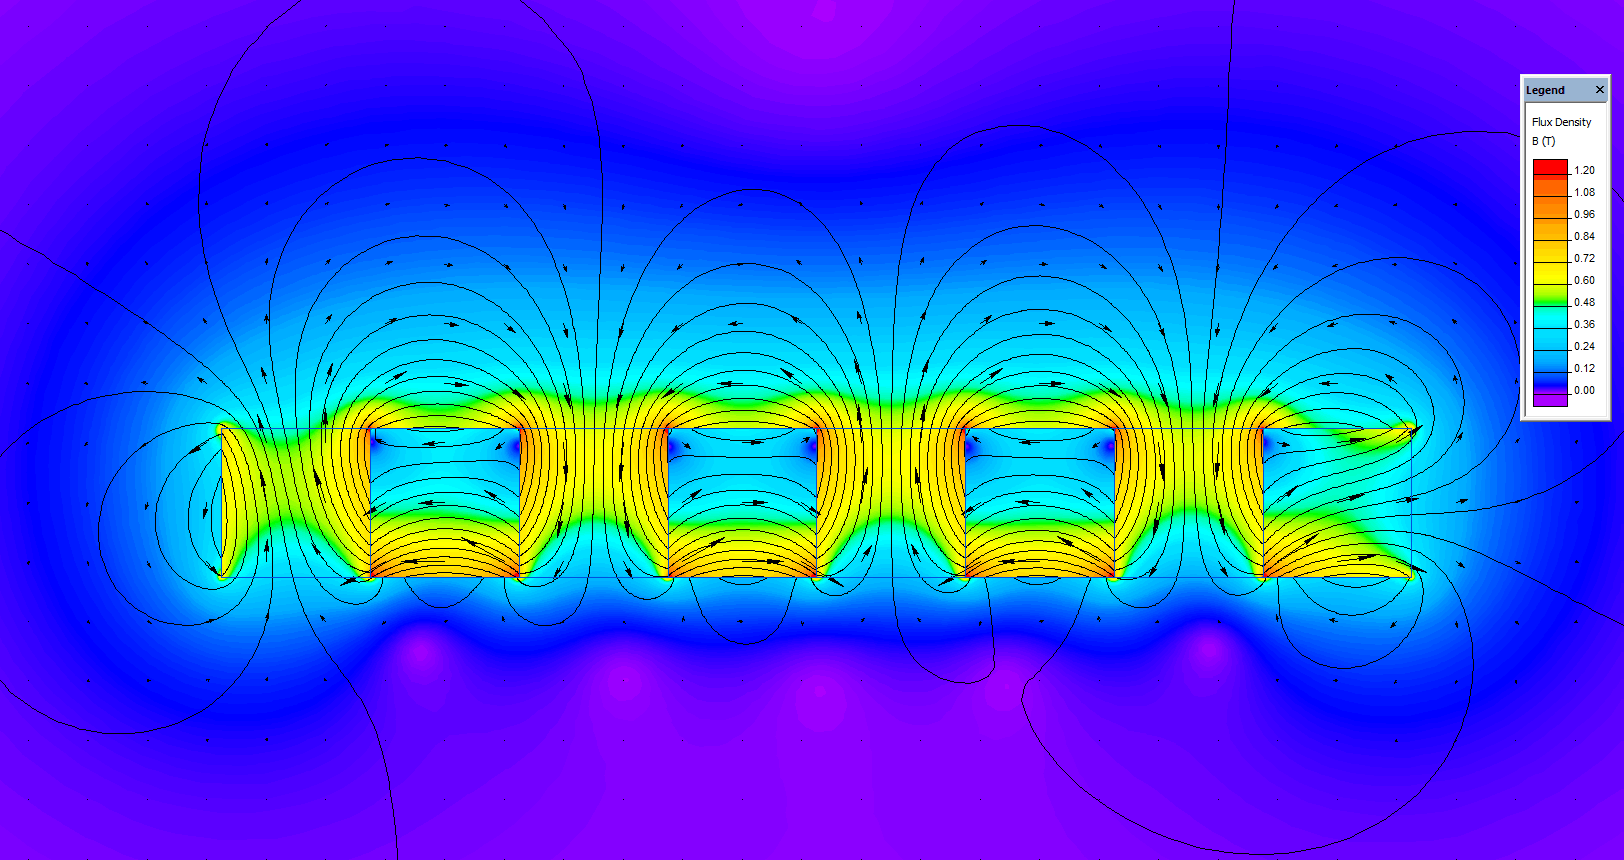 Halbach array magnetic field distribution